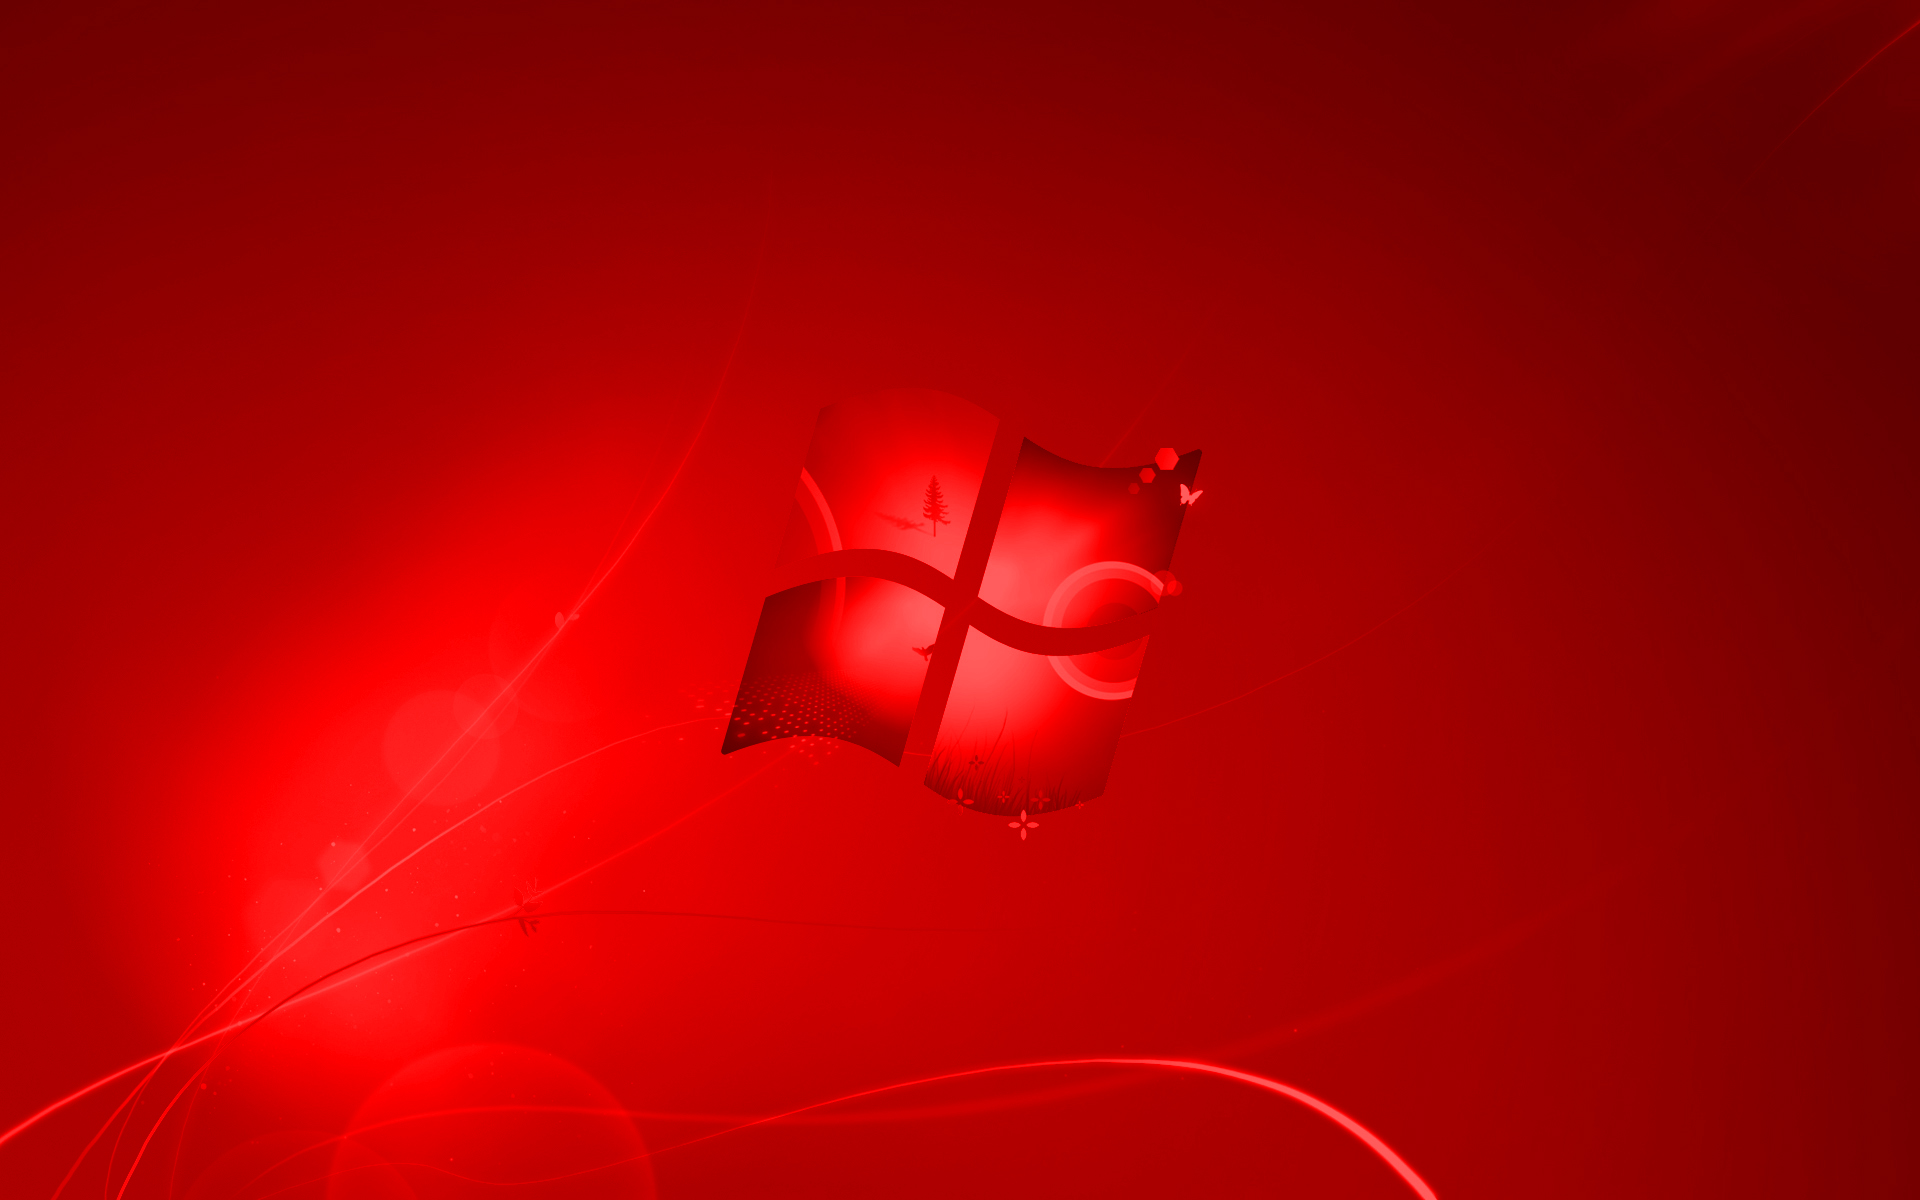 Windows 7 MANLY RED by georgialways on DeviantArt